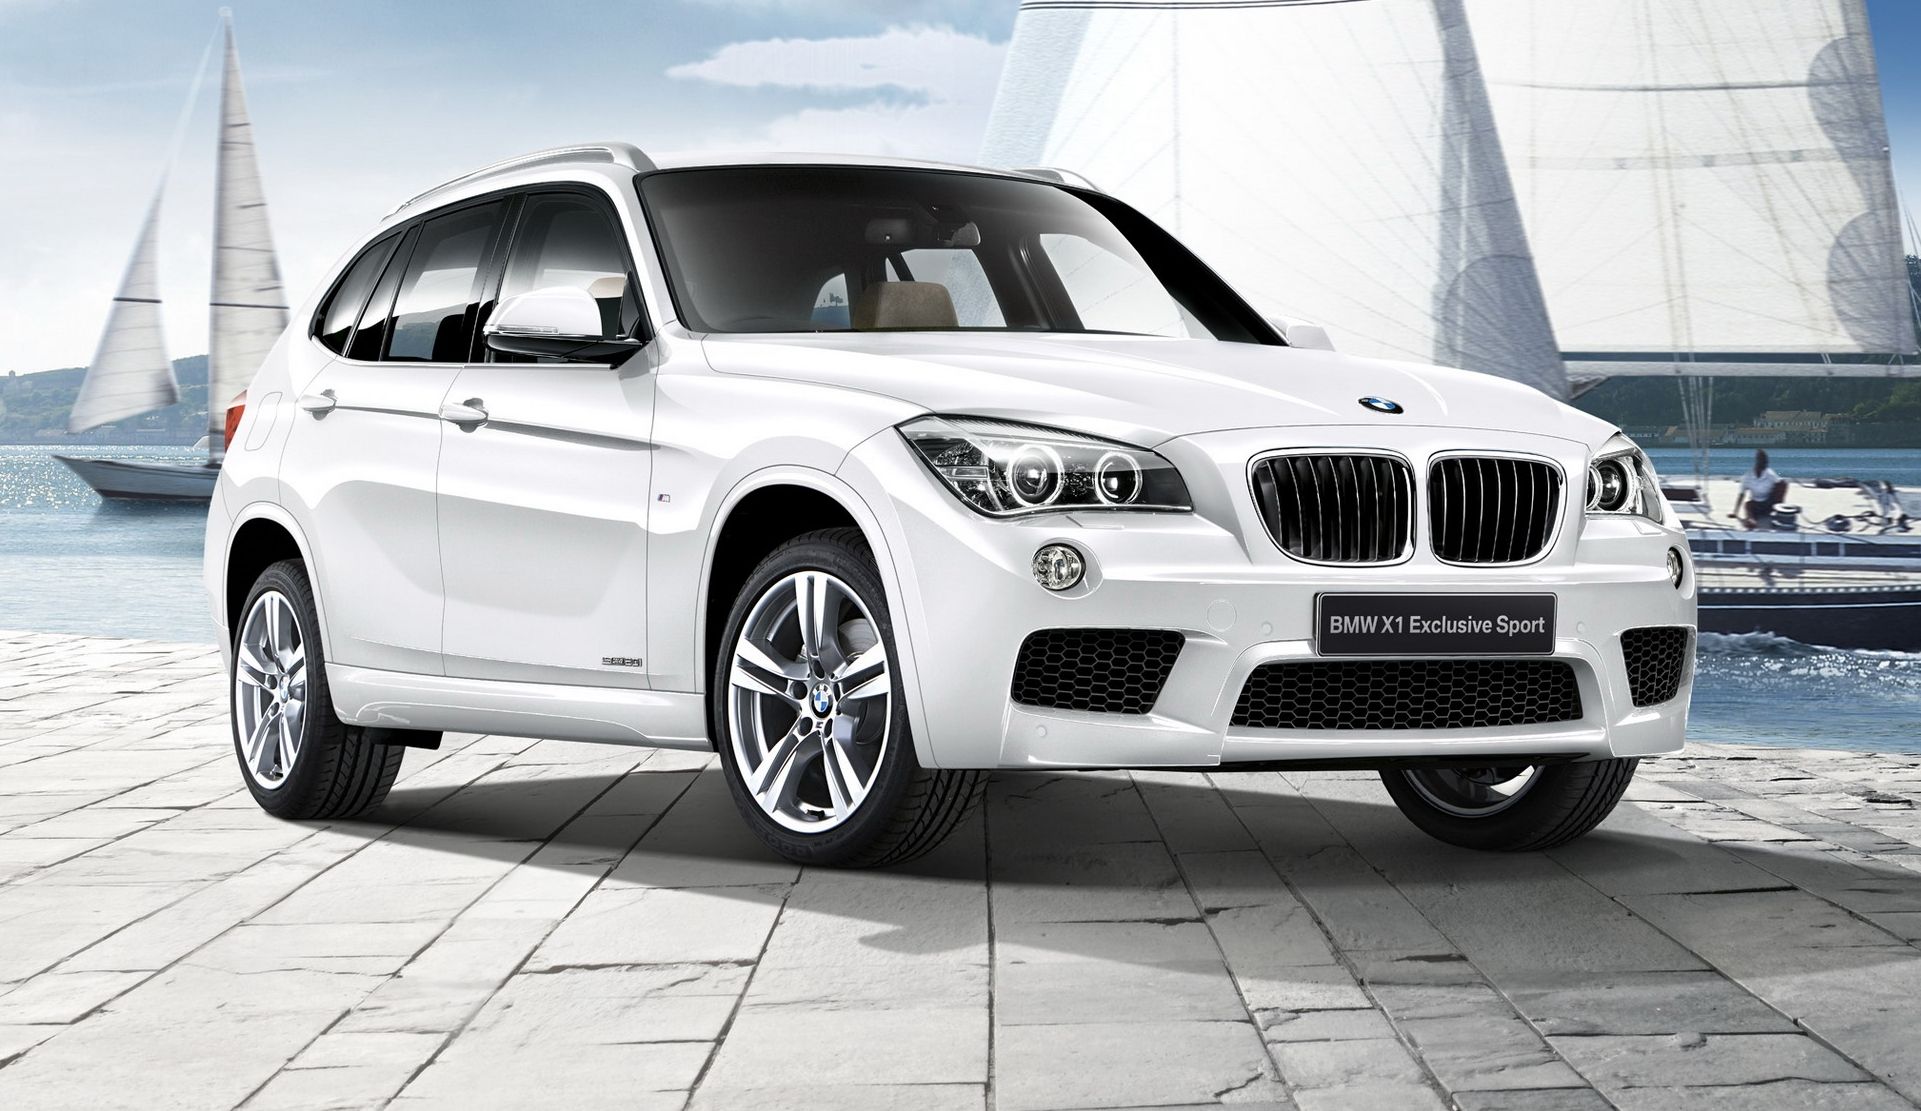 2014 BMW X1 Exclusive Sport